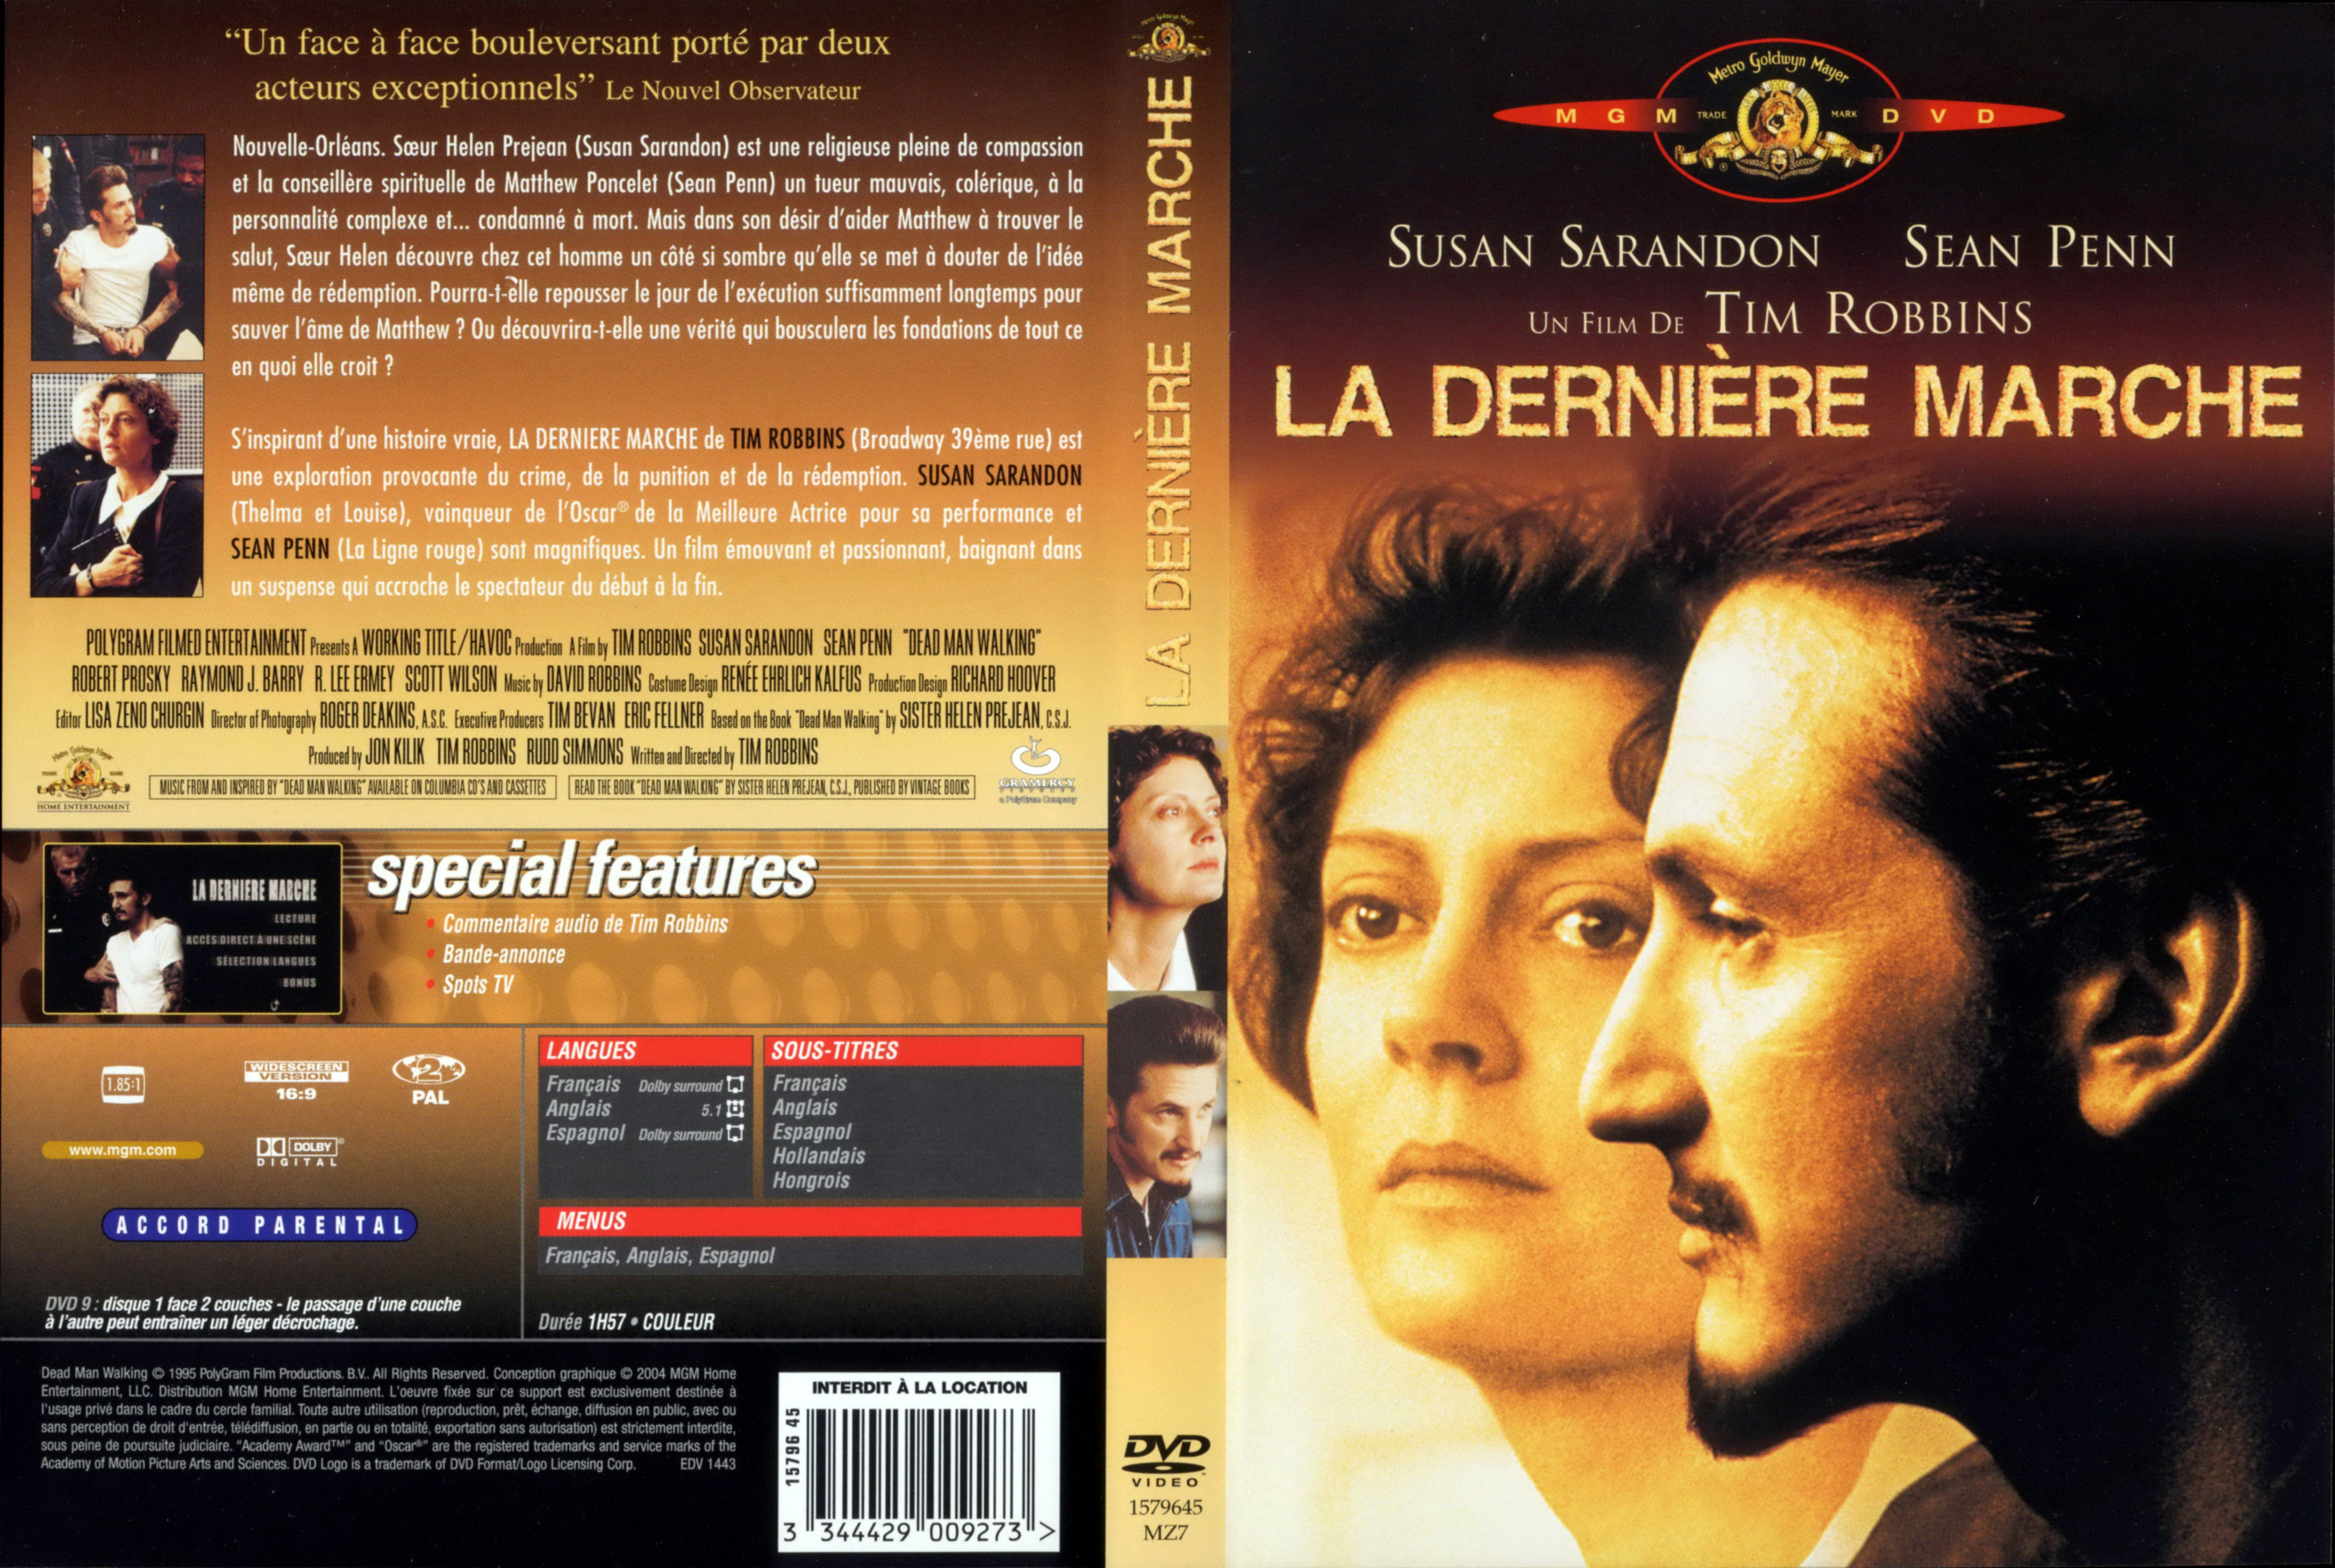 Jaquette DVD La dernire marche v2